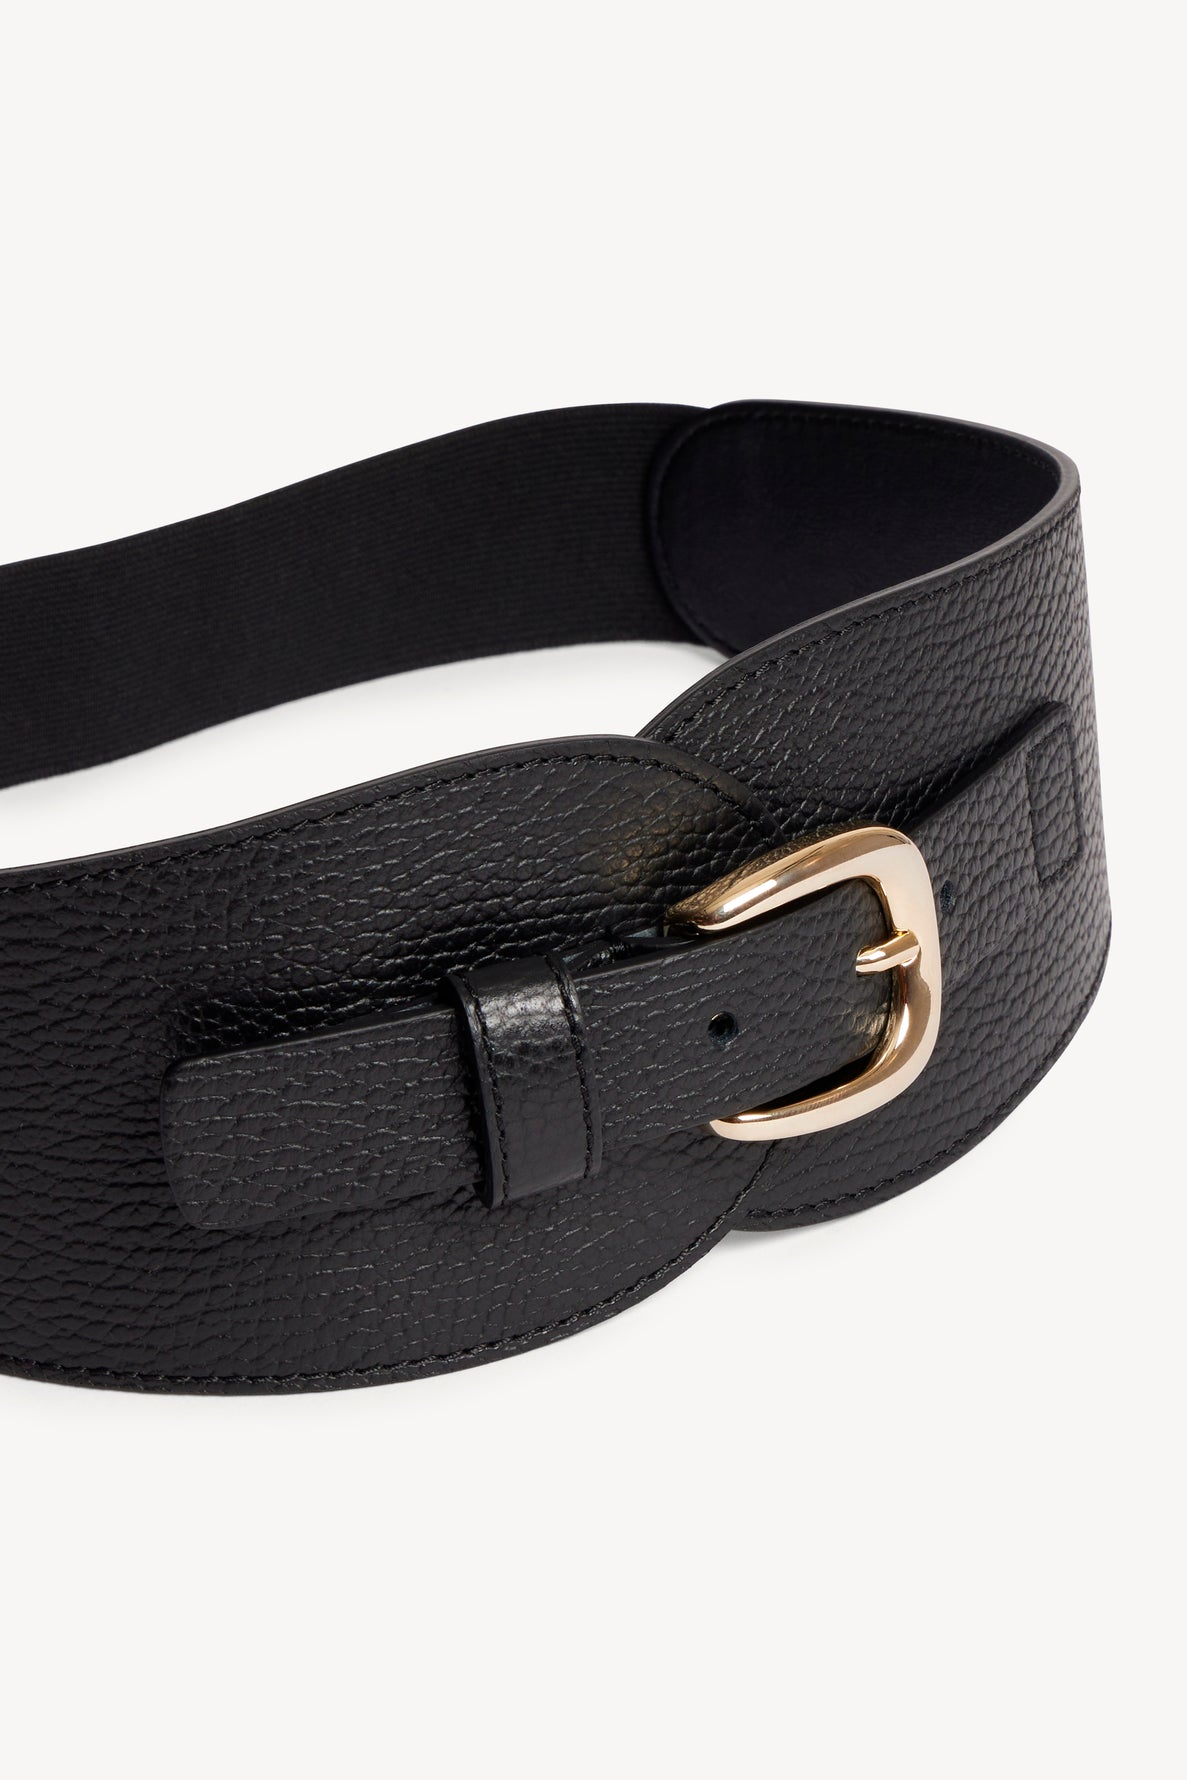 Corset belt in black suede leather - OLYMPE | Gerard Darel